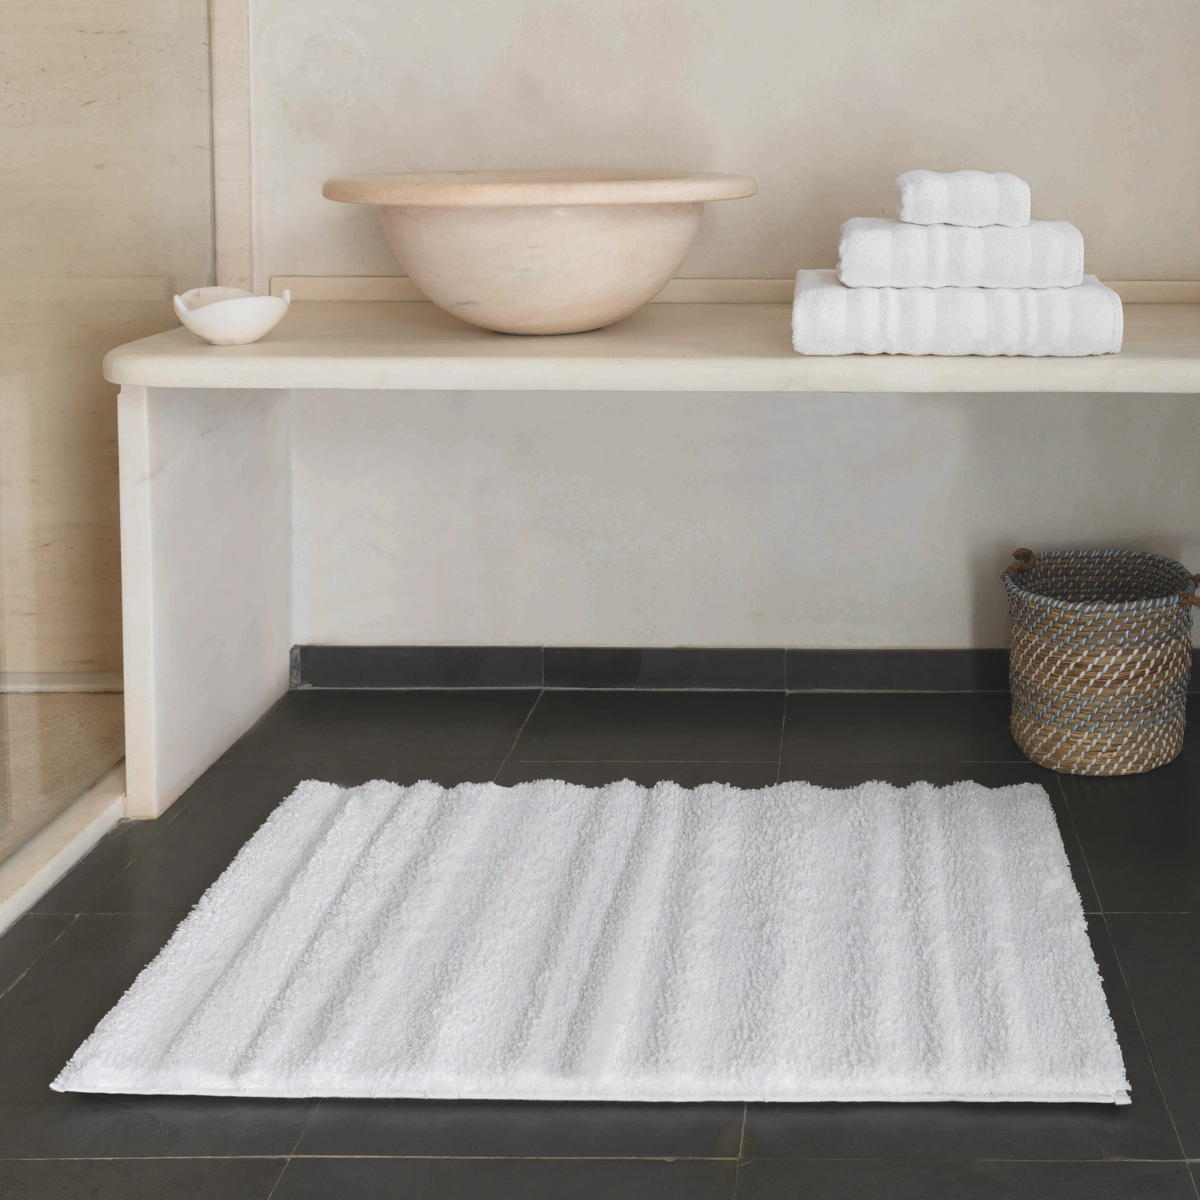 White Graccioza Alentejo Bath Rugs and Towels in Bath Room